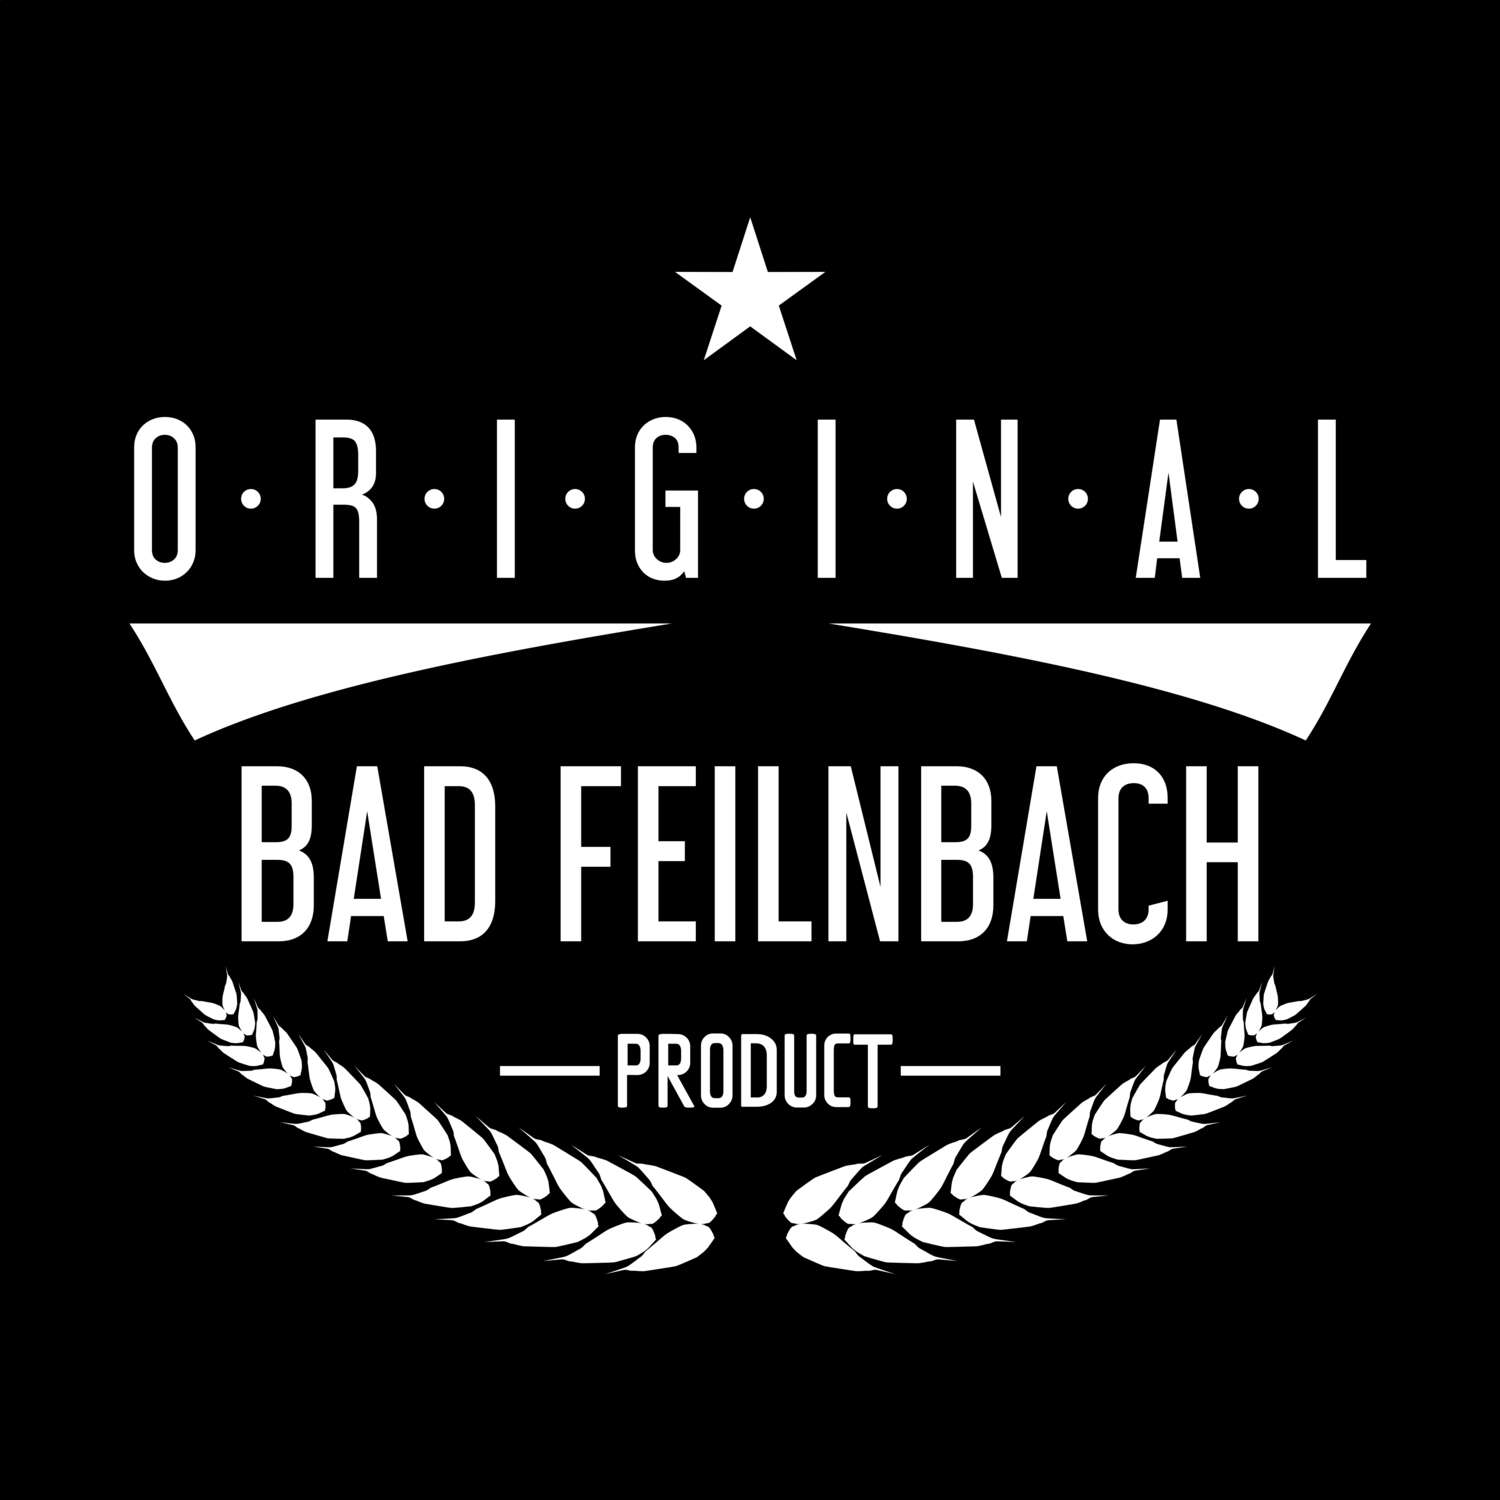 Bad Feilnbach T-Shirt »Original Product«